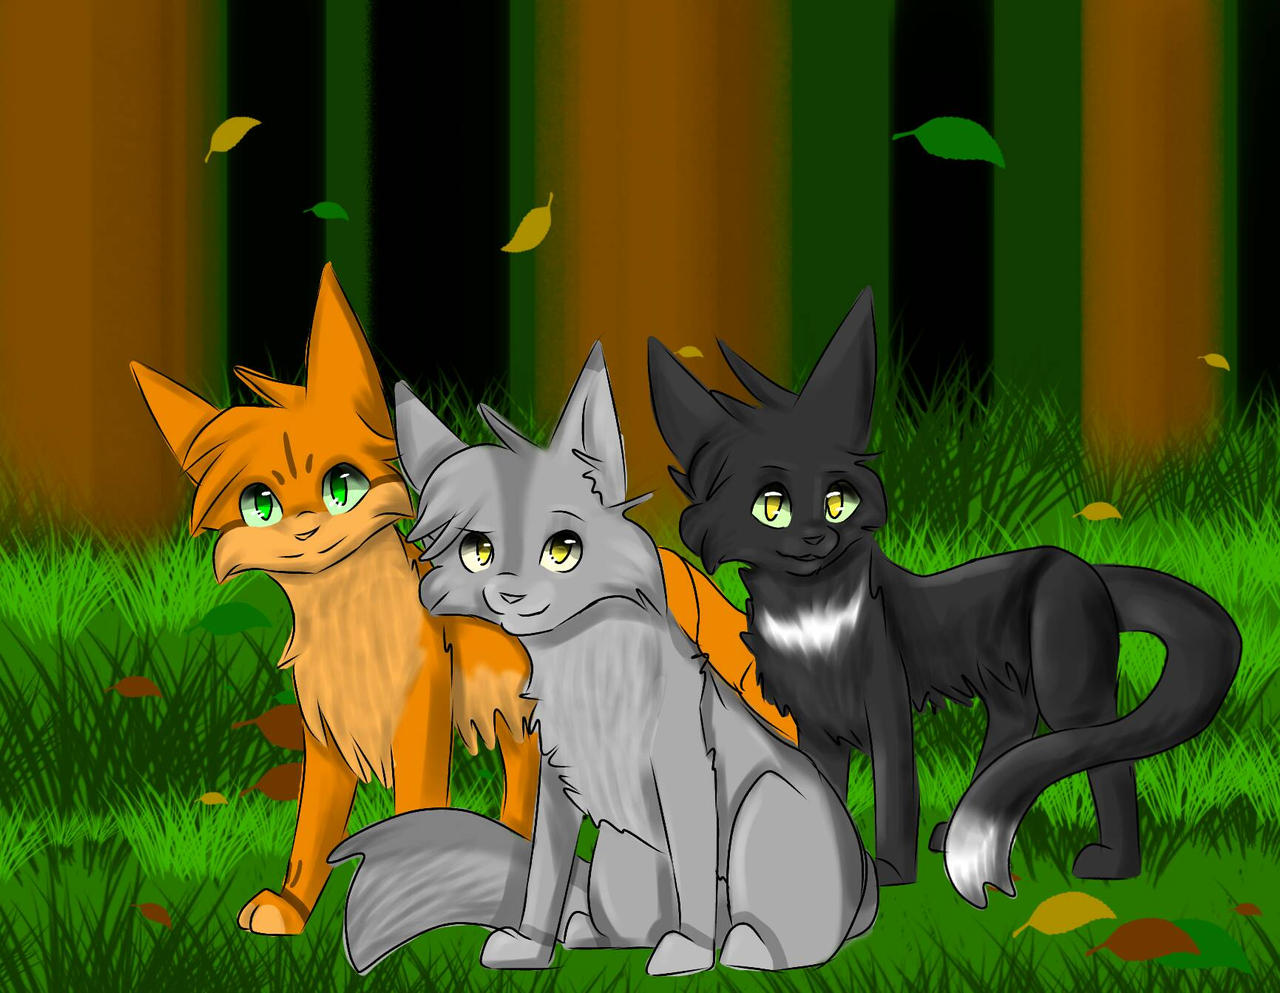 Ravenpaw [Warrior cats] by ShaDowL09 on DeviantArt